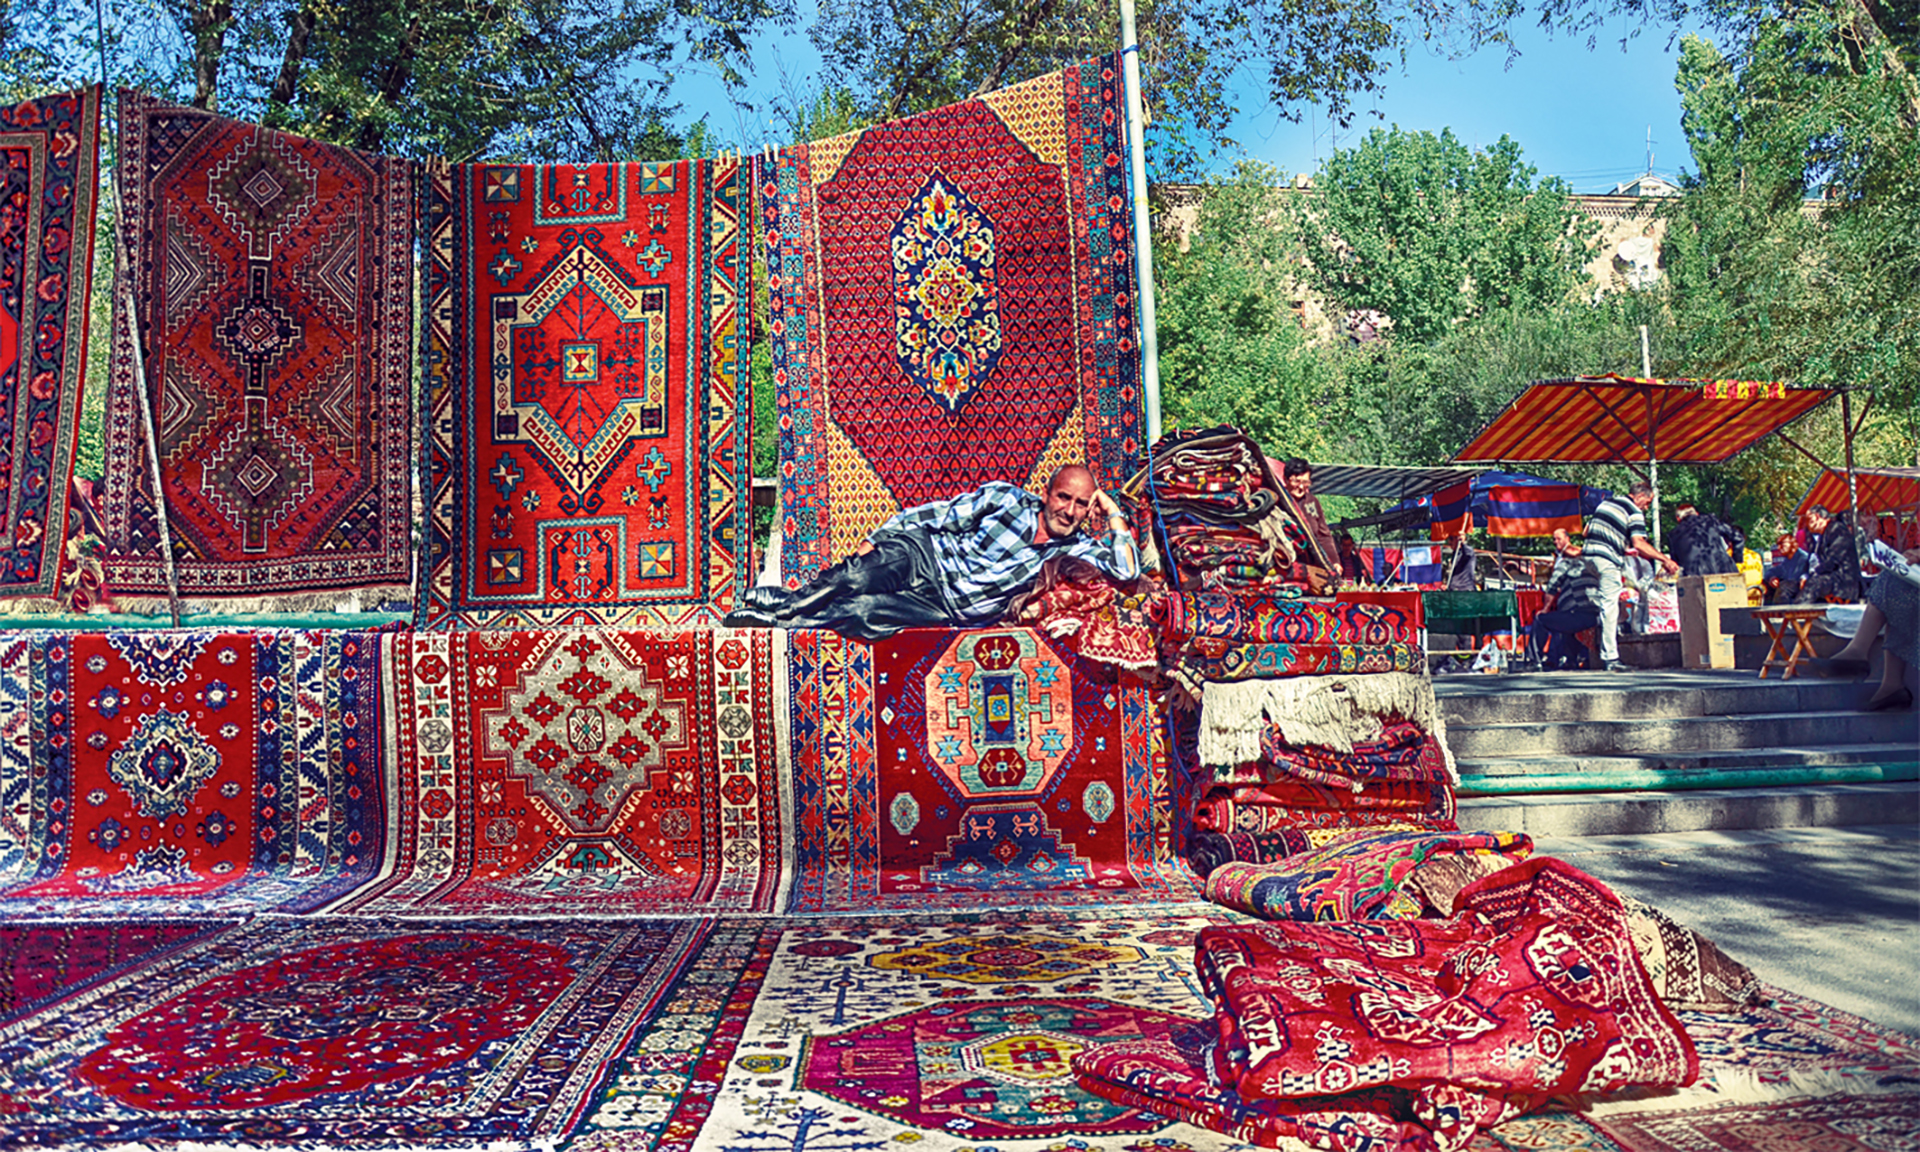 Vernissage Market of armenia